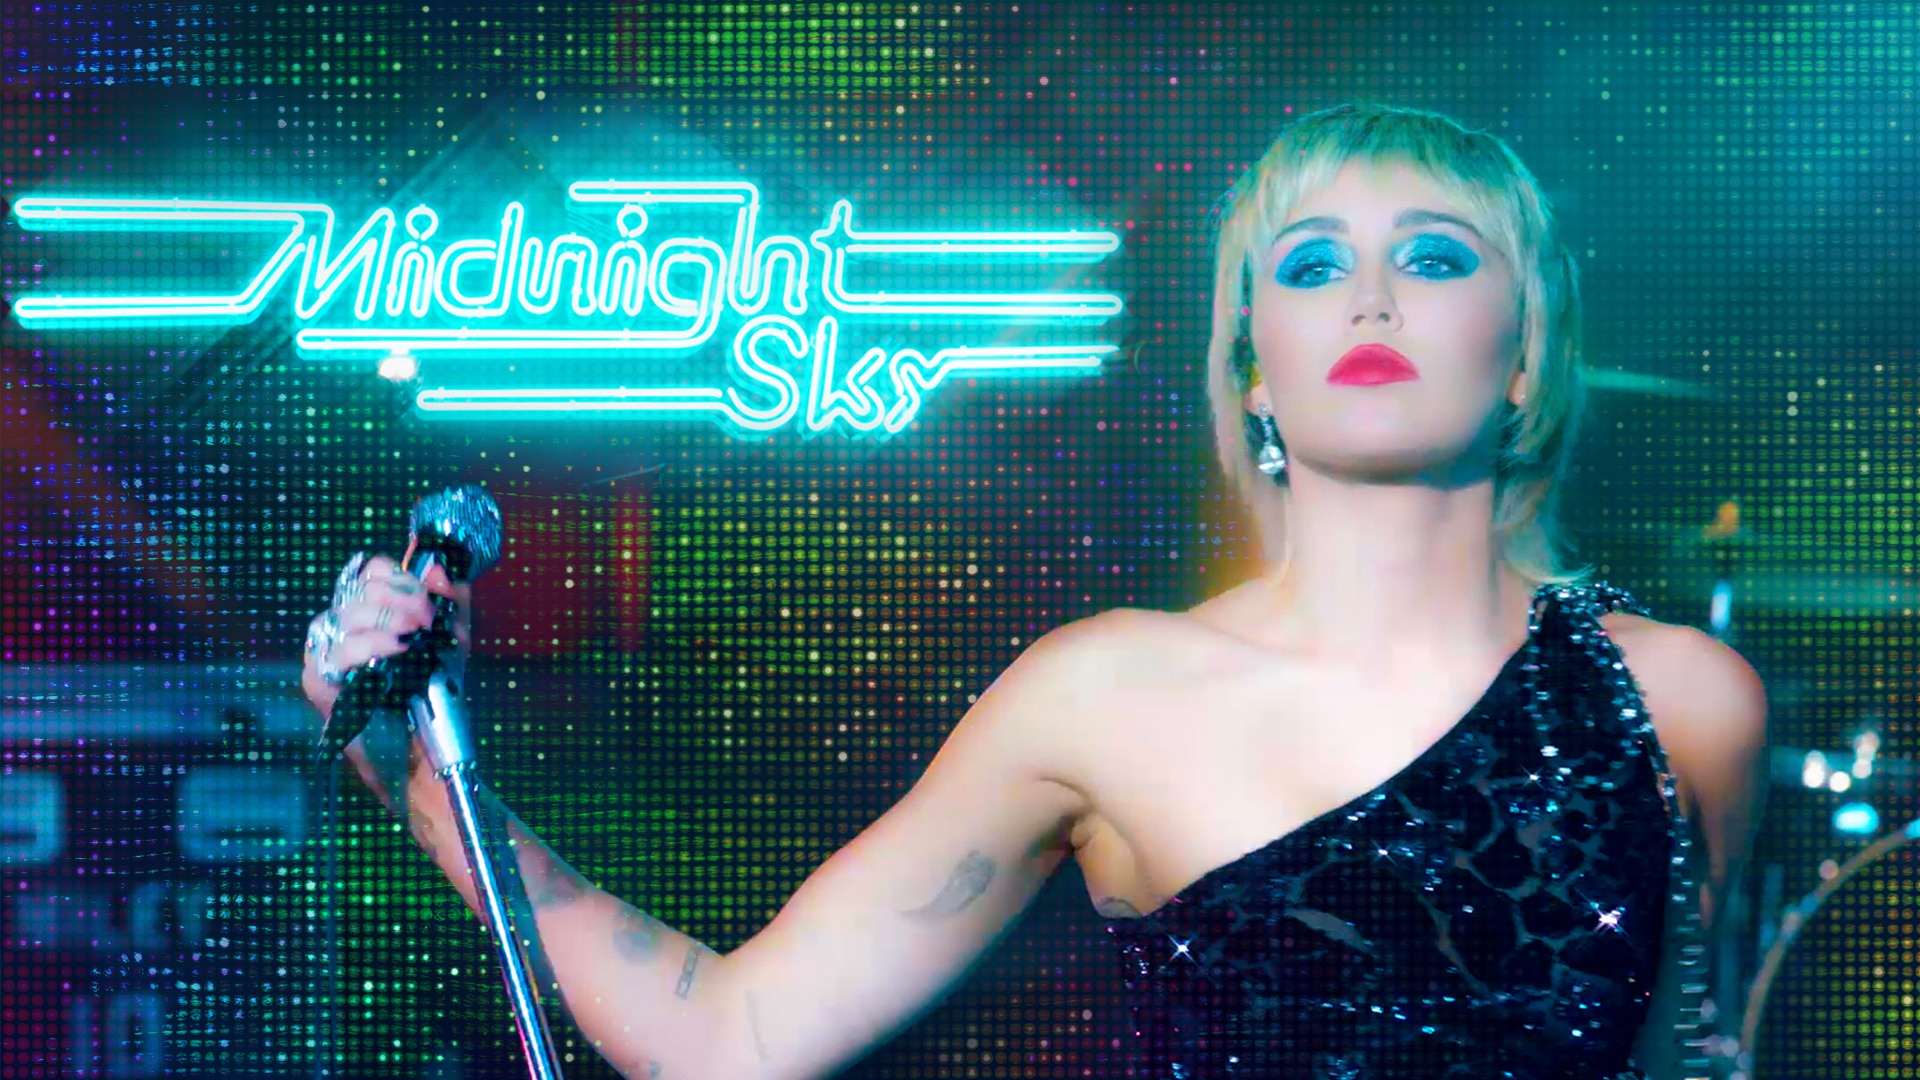 Miley Cyrus Midnight Sky : Miley Cyrus's Designer Outfits in "Midnight Sky" Music ... : Miley cyrus — midnight sky (муз тв неспиннер 2020).